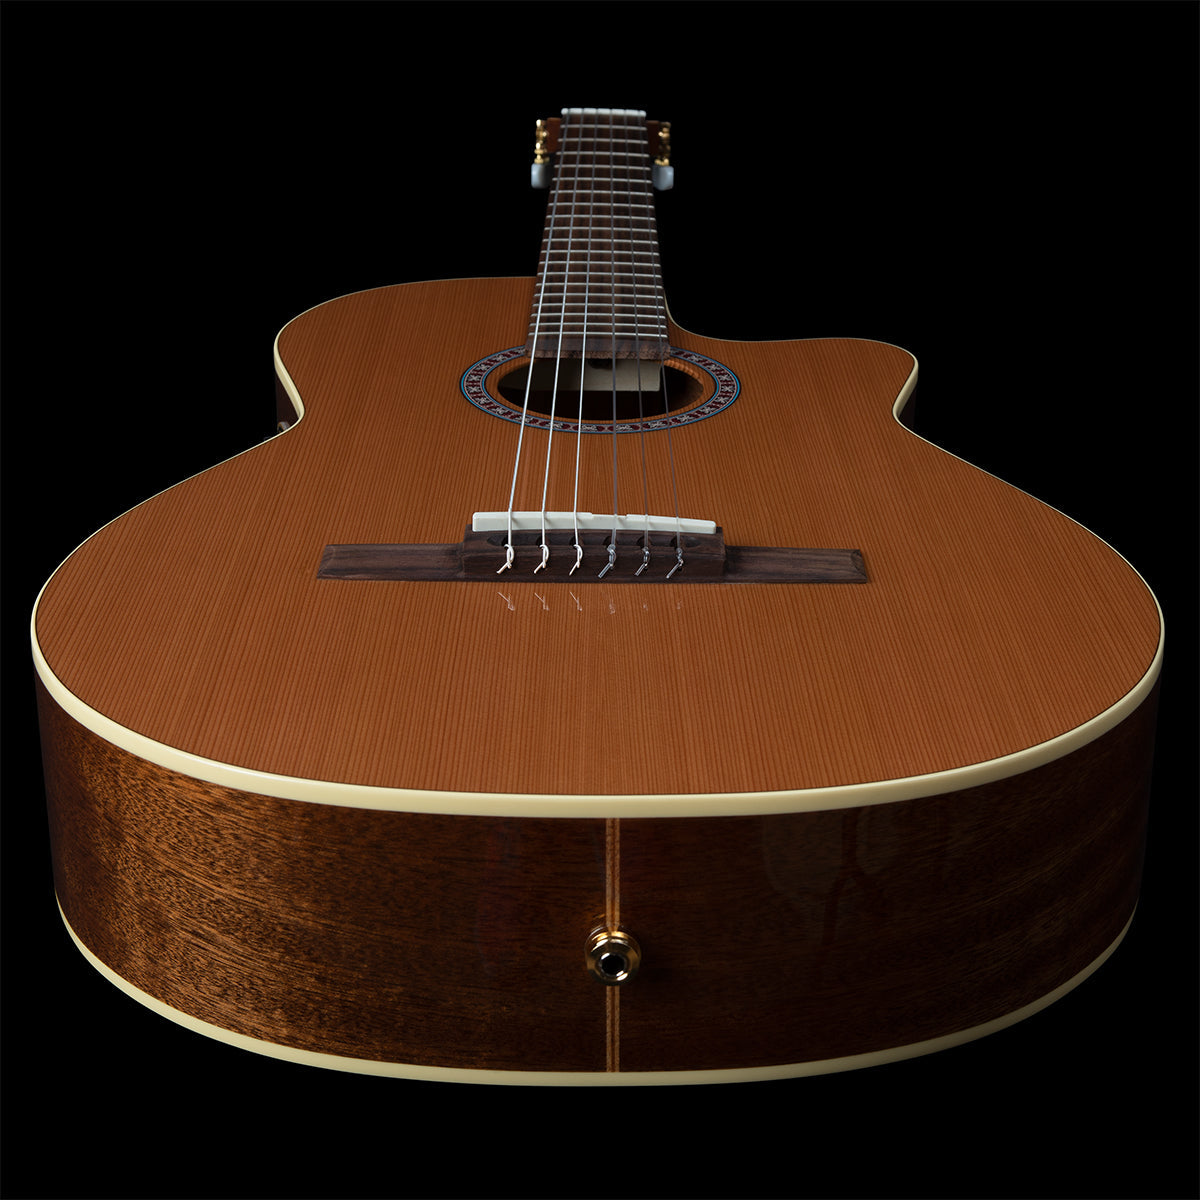 Godin Concert Cutaway Clasica II Nylon String Electro Guitar,  for sale at Richards Guitars.